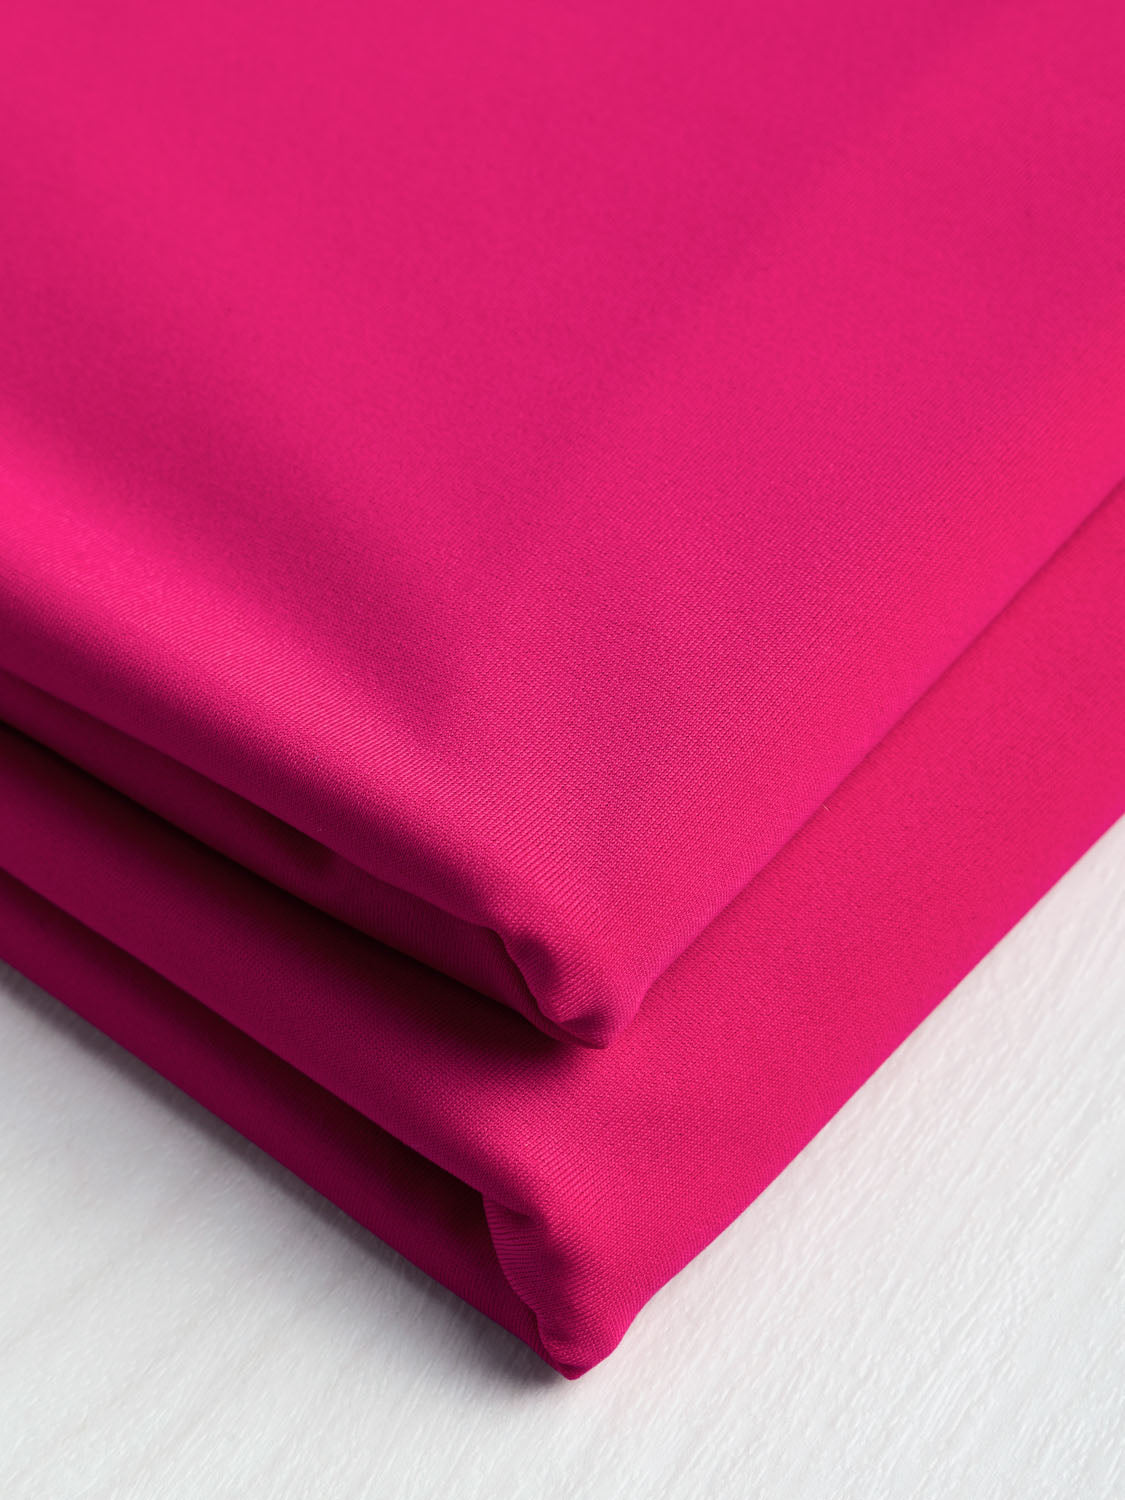 Recycled Nylon Spandex Swimwear Fabric - Vibrant Fuchsia | Core Fabrics